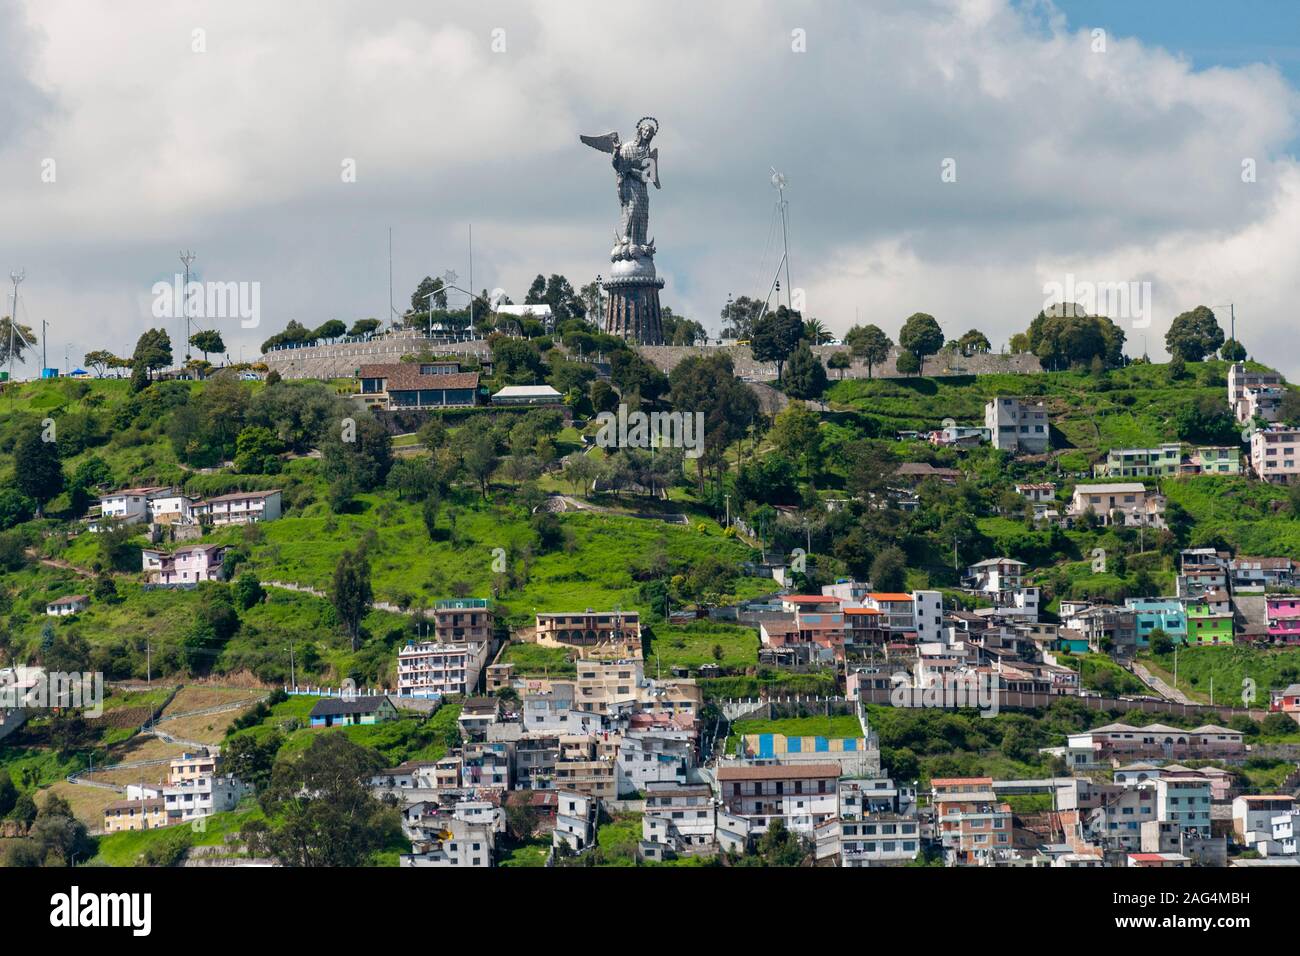 The Virgin of El Panecillo statue overlooking Quito, Ecuador. Stock Photo